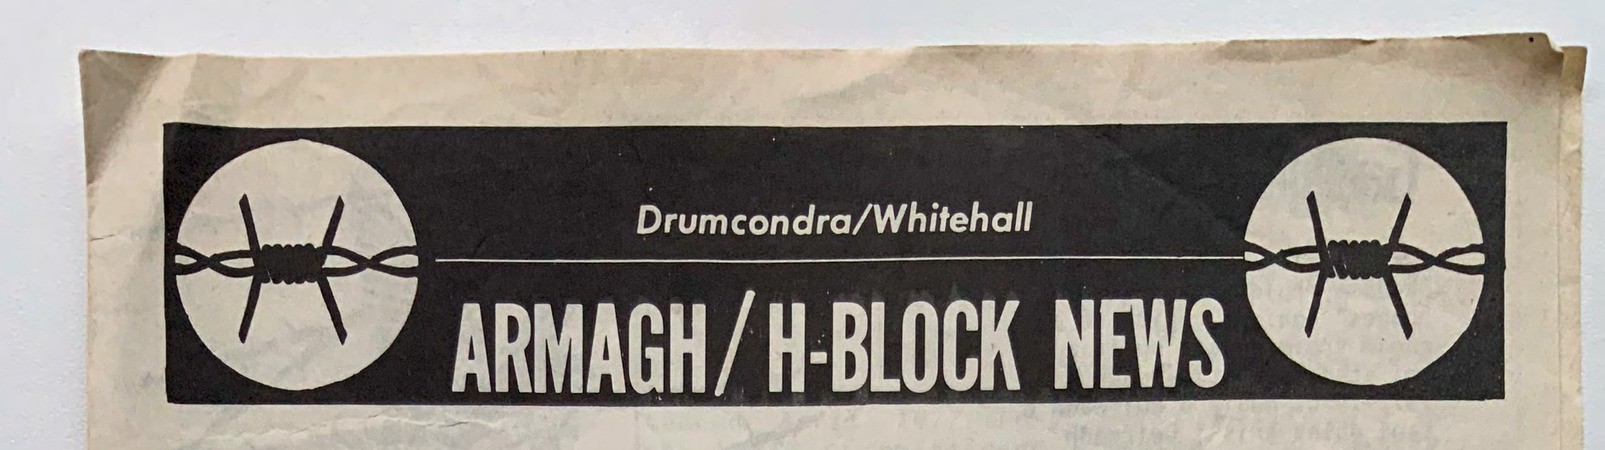 Armagh / H-Block News